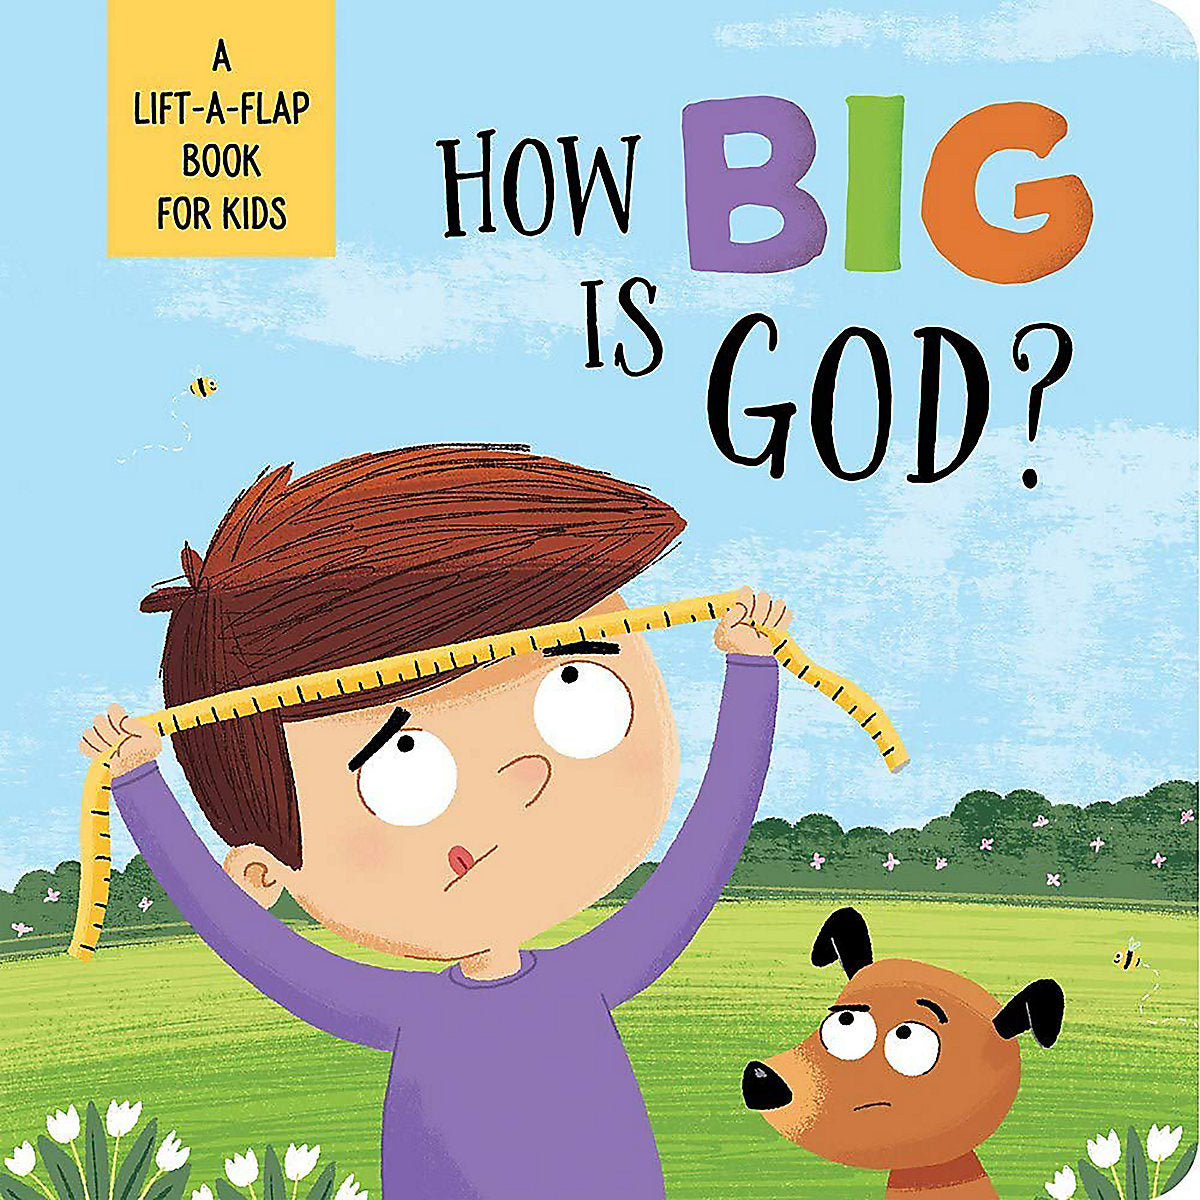 HOW BIG IS GOD BOOK